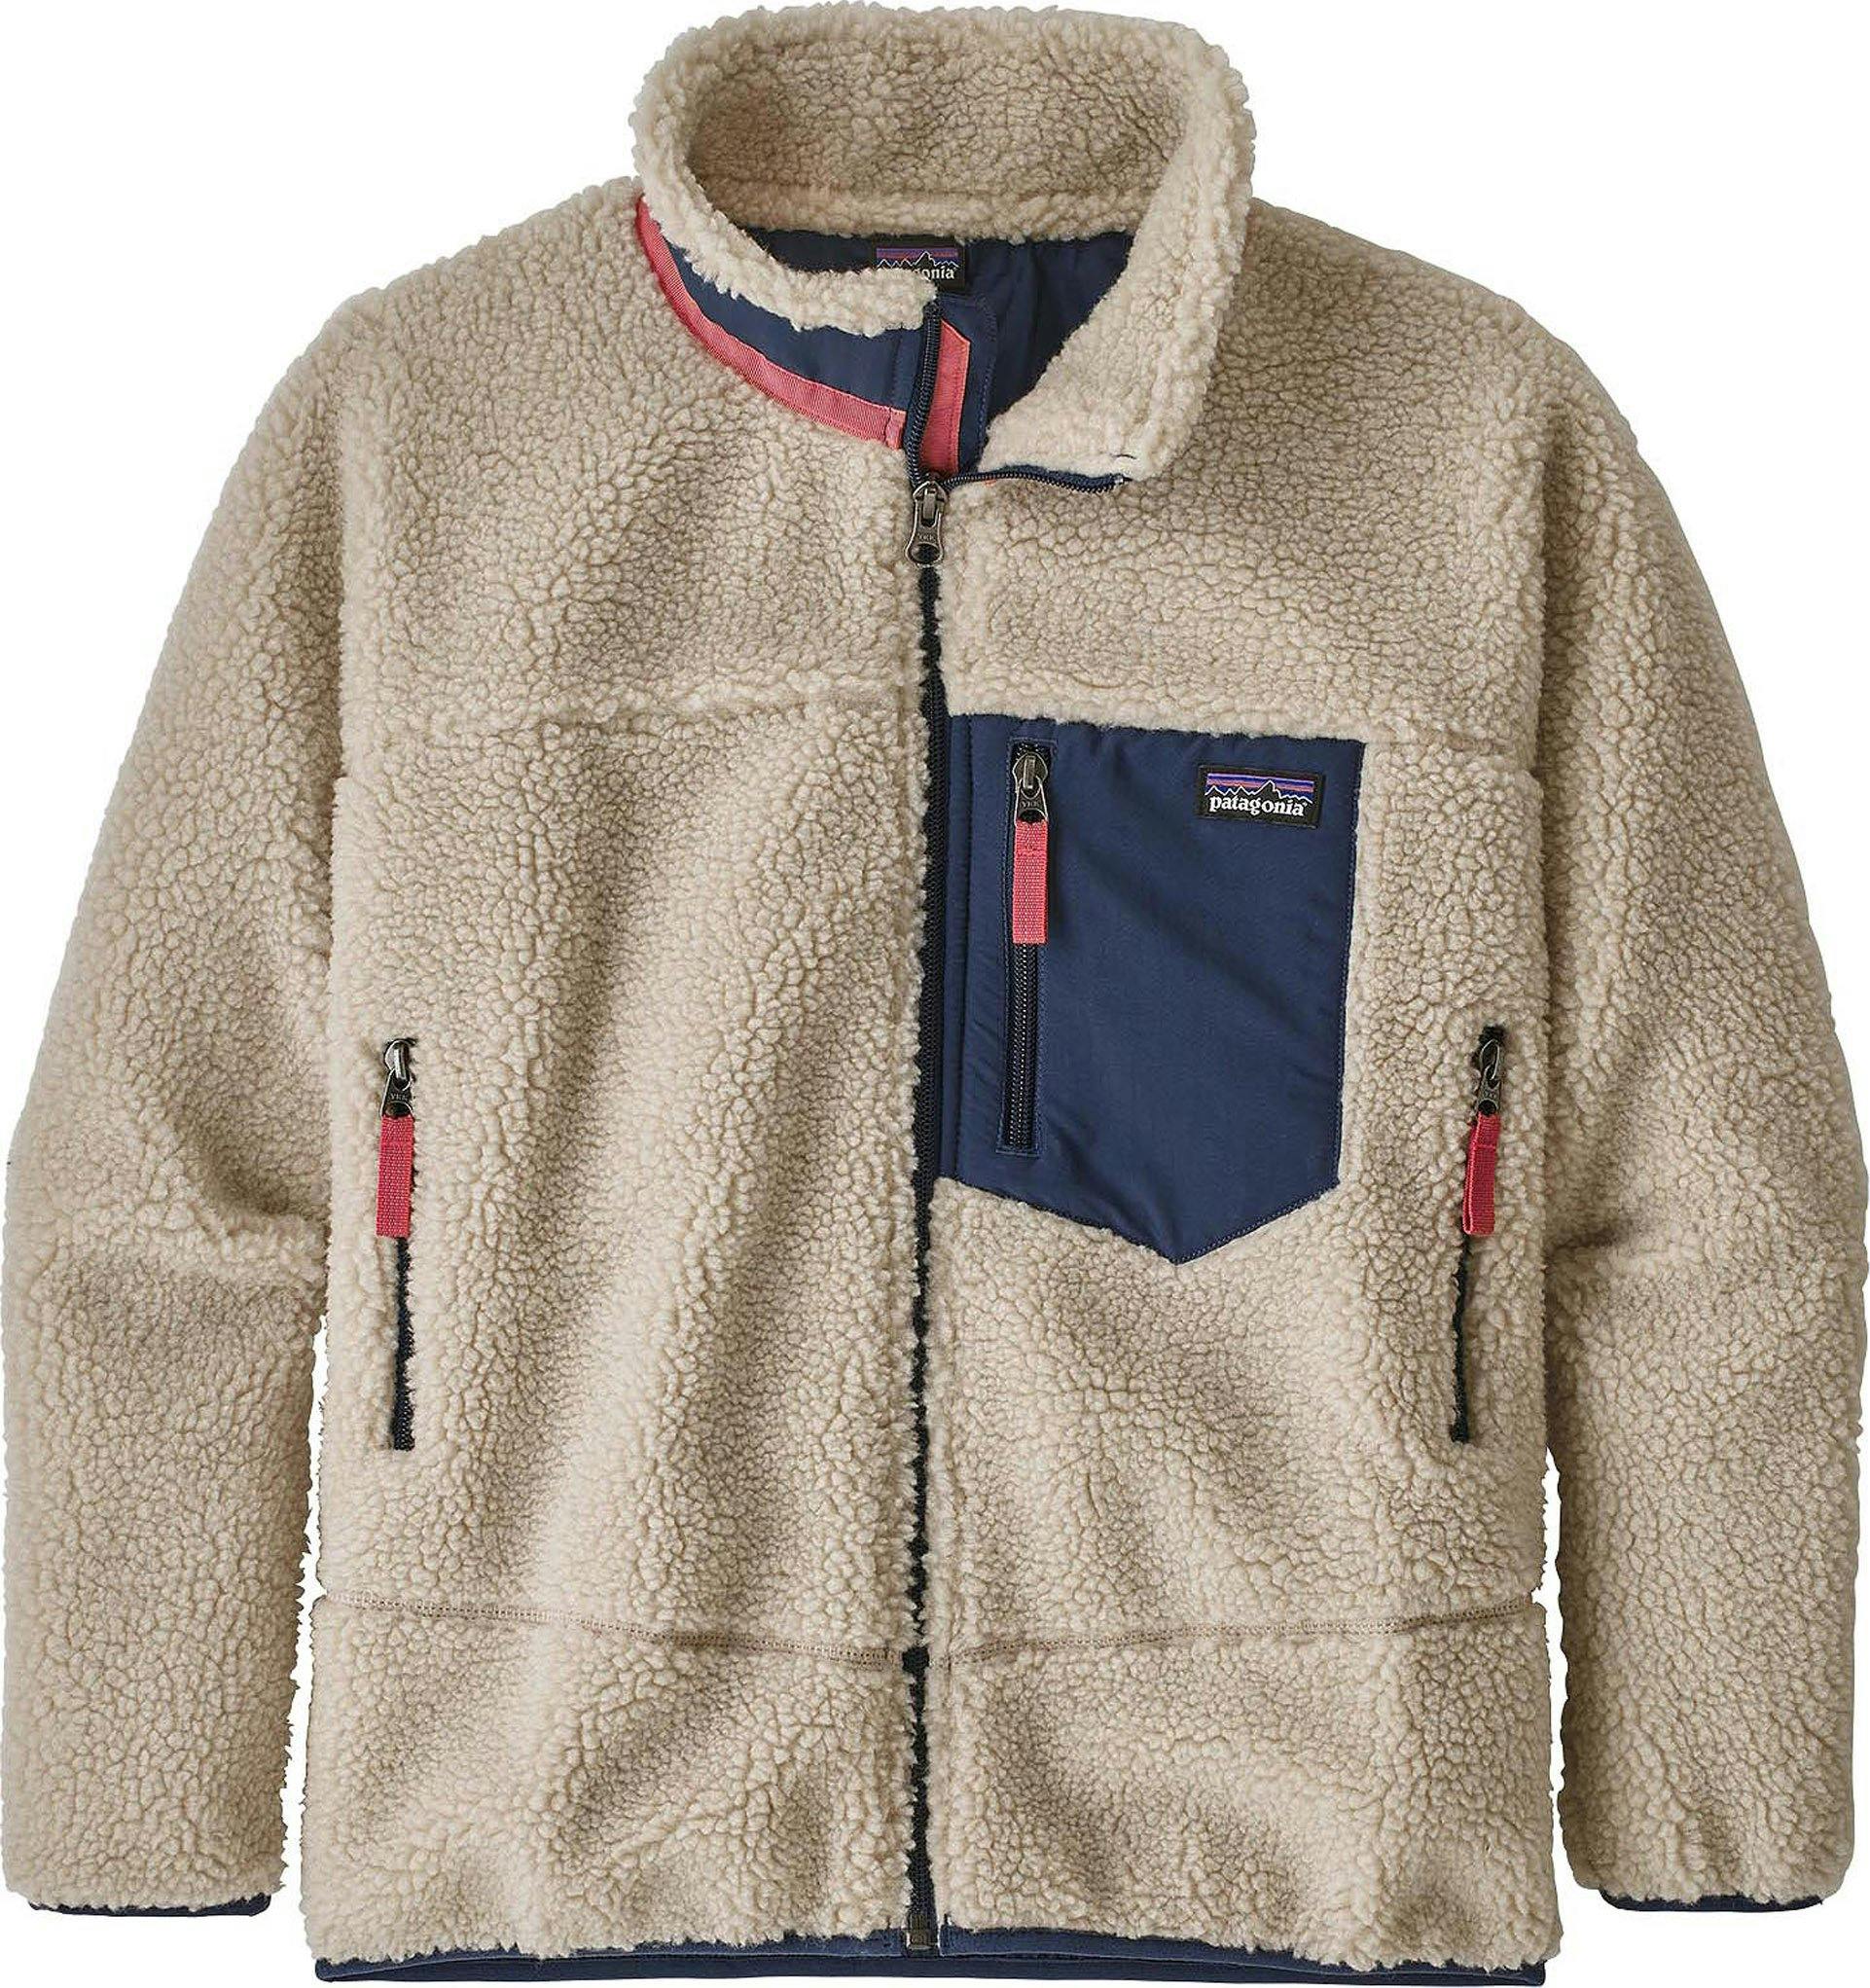 Product image for Classic Retro-X Fleece Jacket - Kids